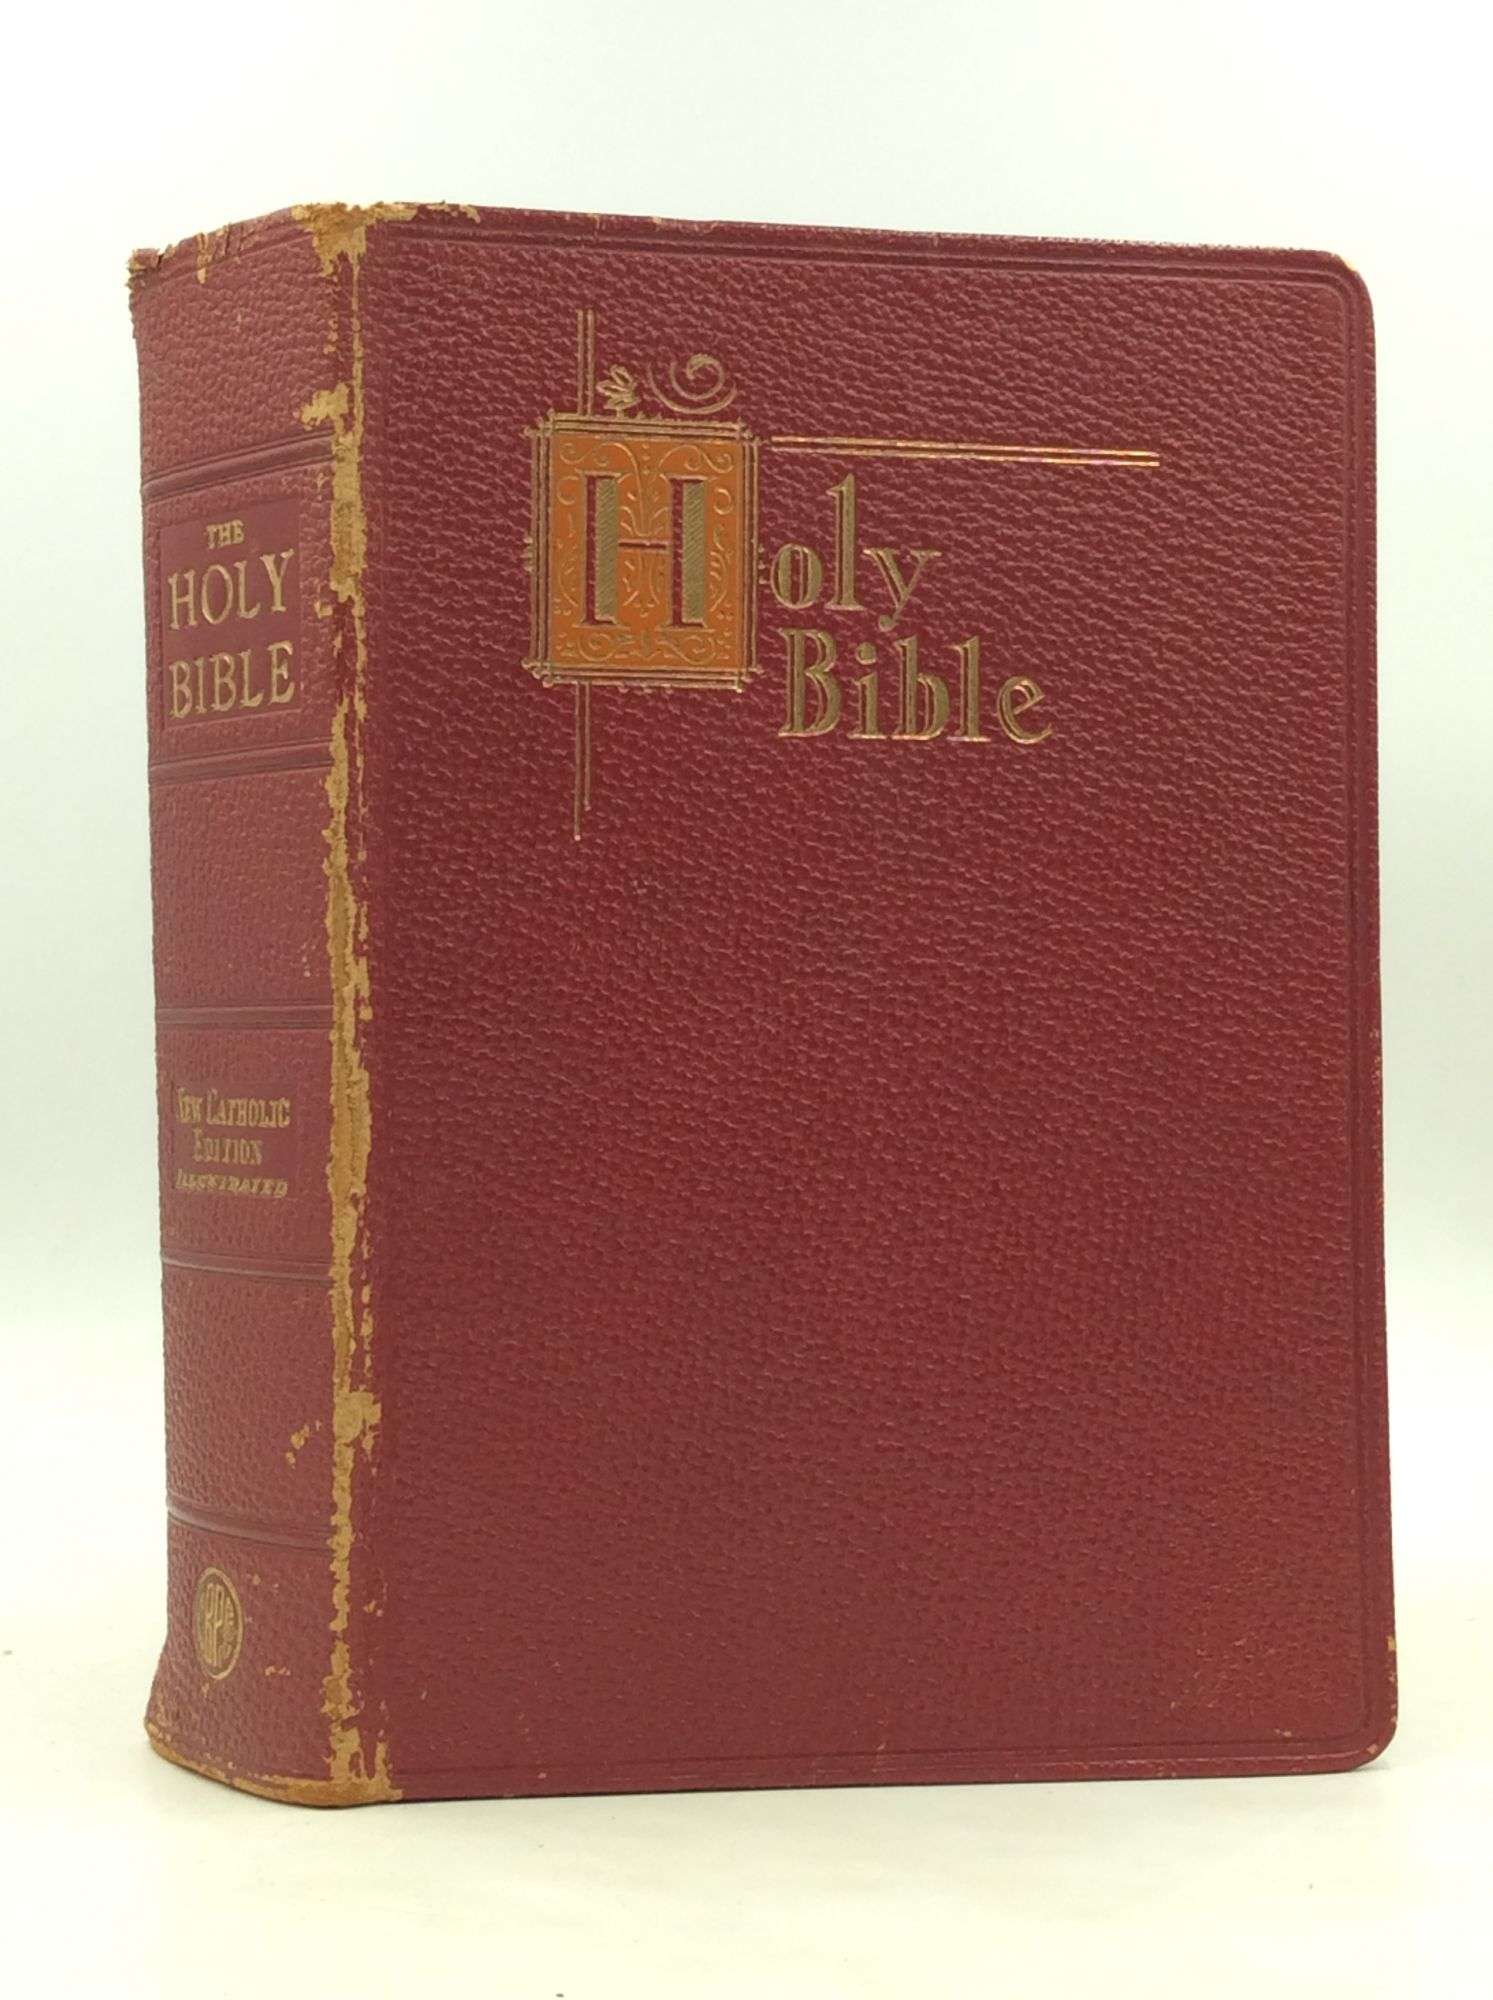 NEW CATHOLIC EDITION OF THE HOLY BIBLE